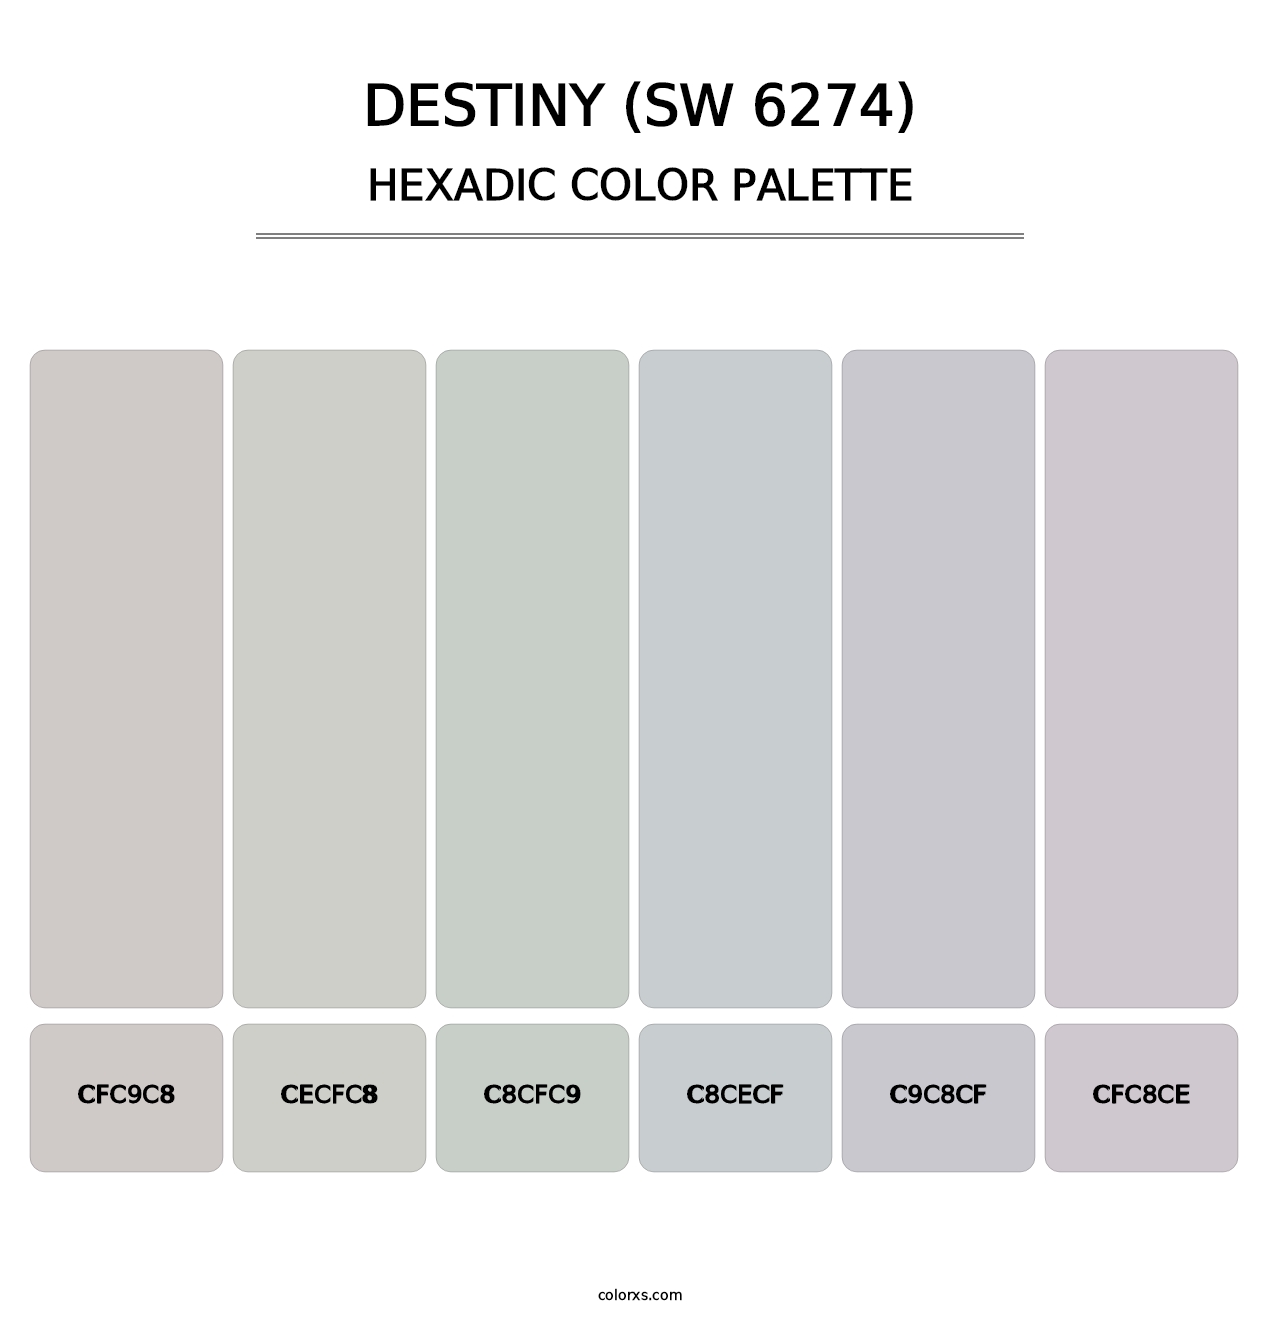 Destiny (SW 6274) - Hexadic Color Palette